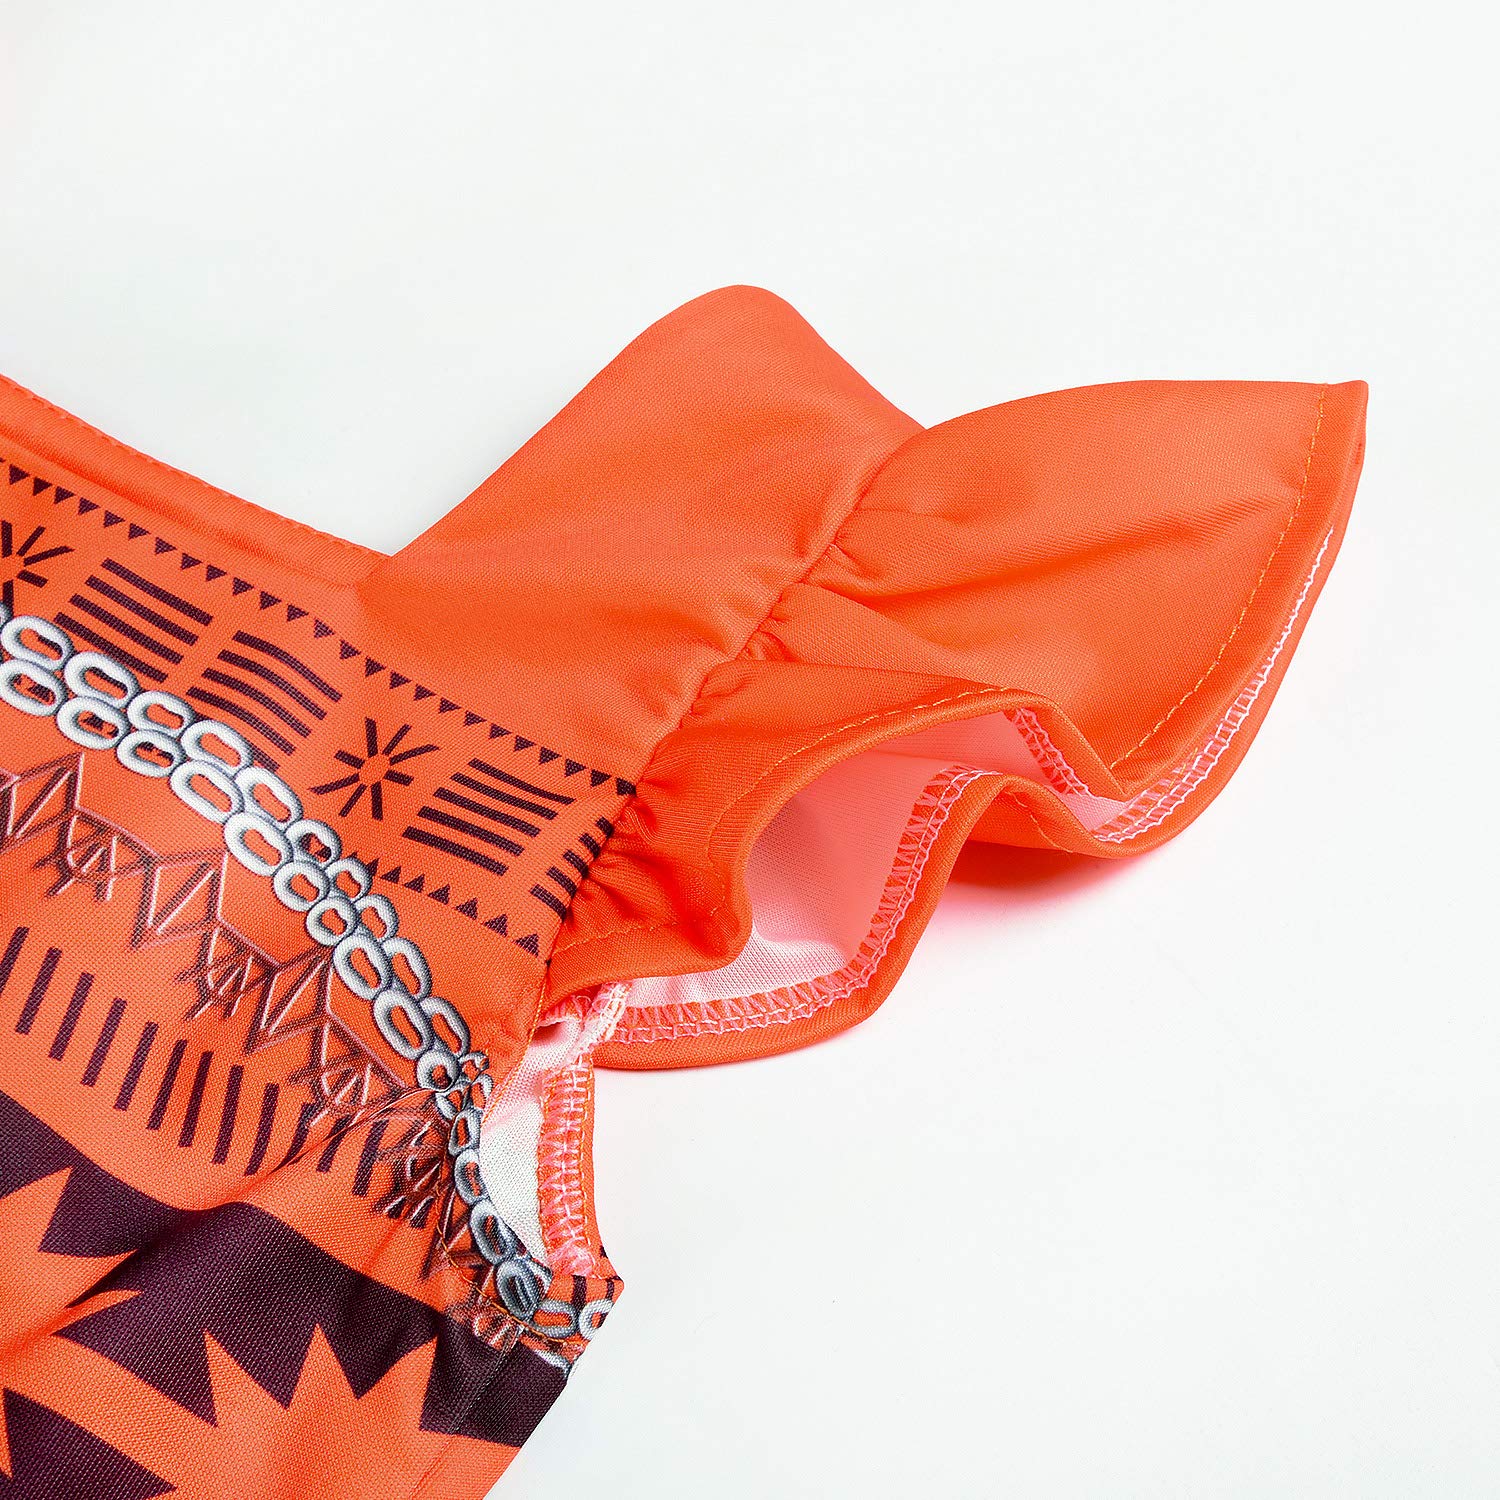 JerrisApparel Princess Costume Two-Piece Skirt Set Dress Up for Girls (3T-4T, Orange)